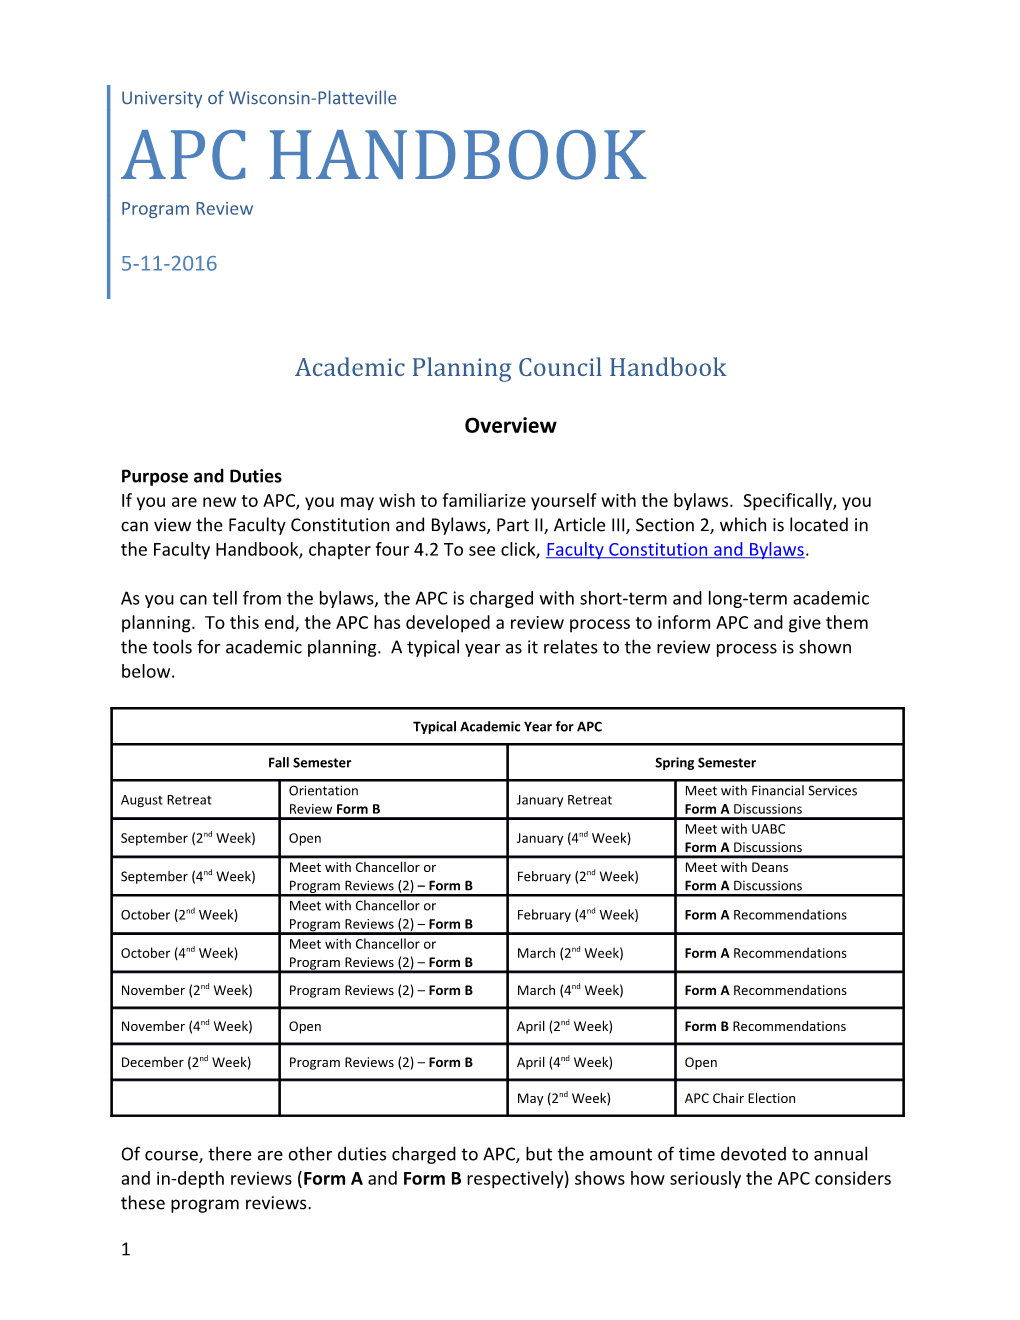 Academic Planning Council Handbook